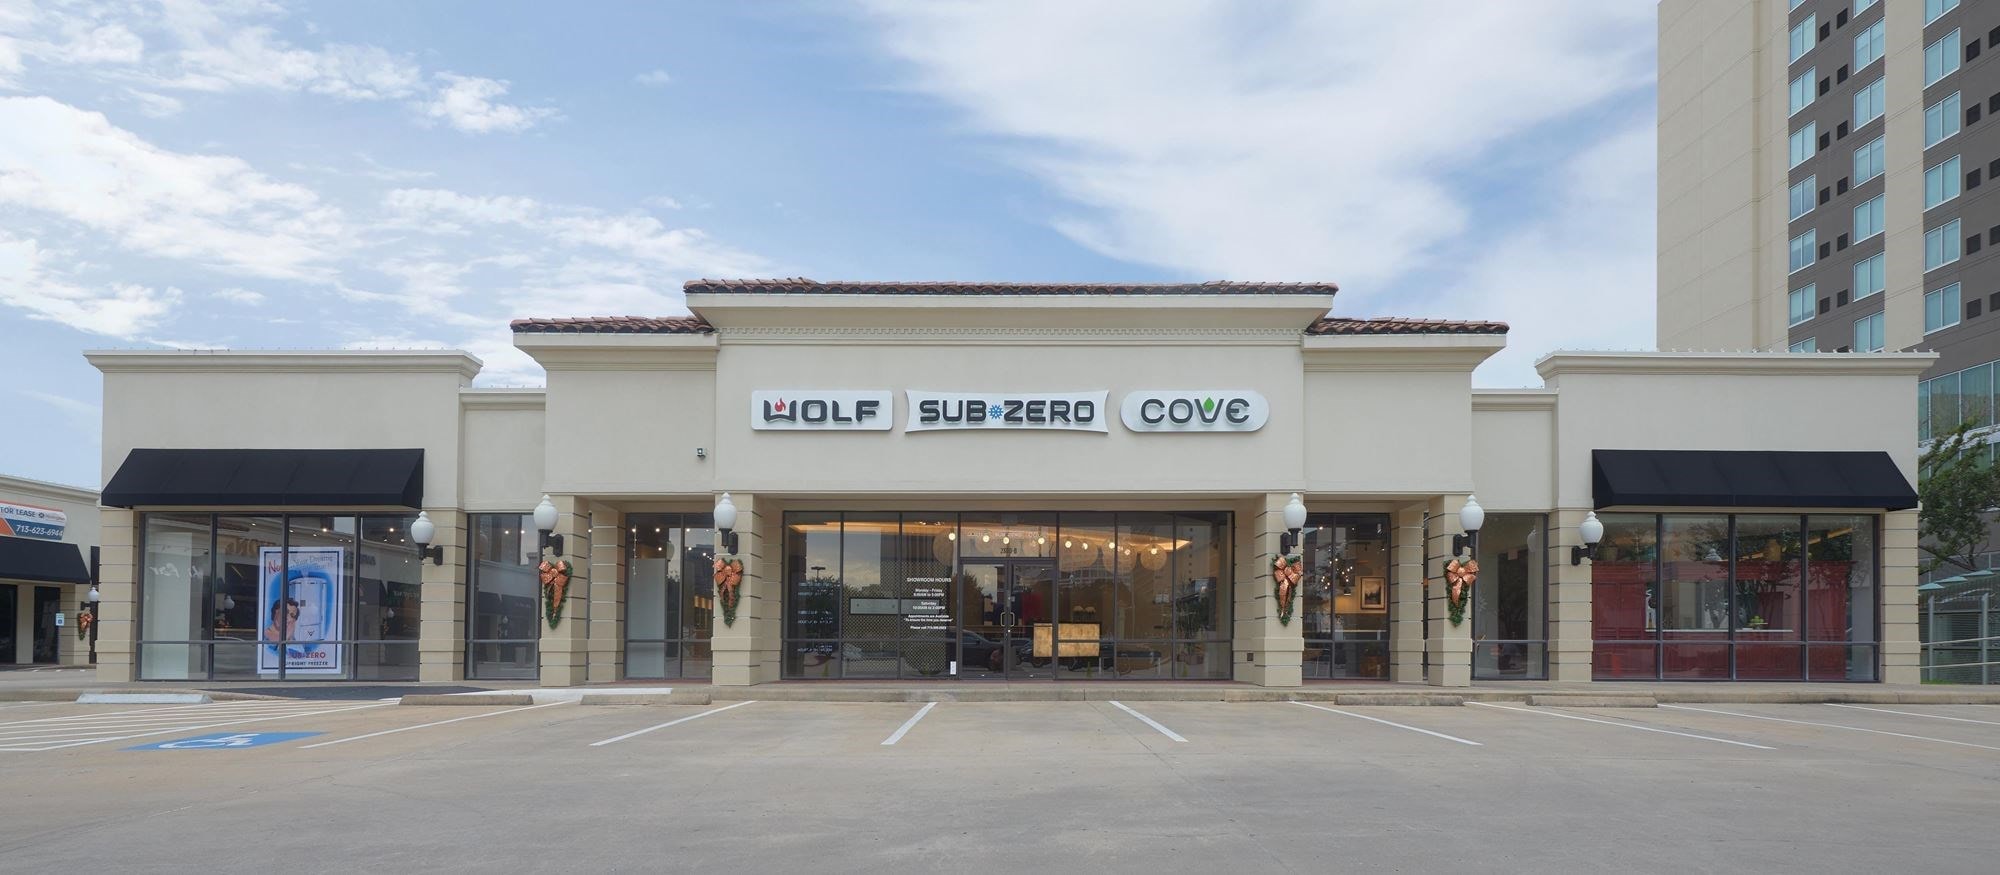 The Best Sub Zero Wolf Cove Kitchen Appliances Factory Builder Stores Premium Appliances And Custom Cabinets